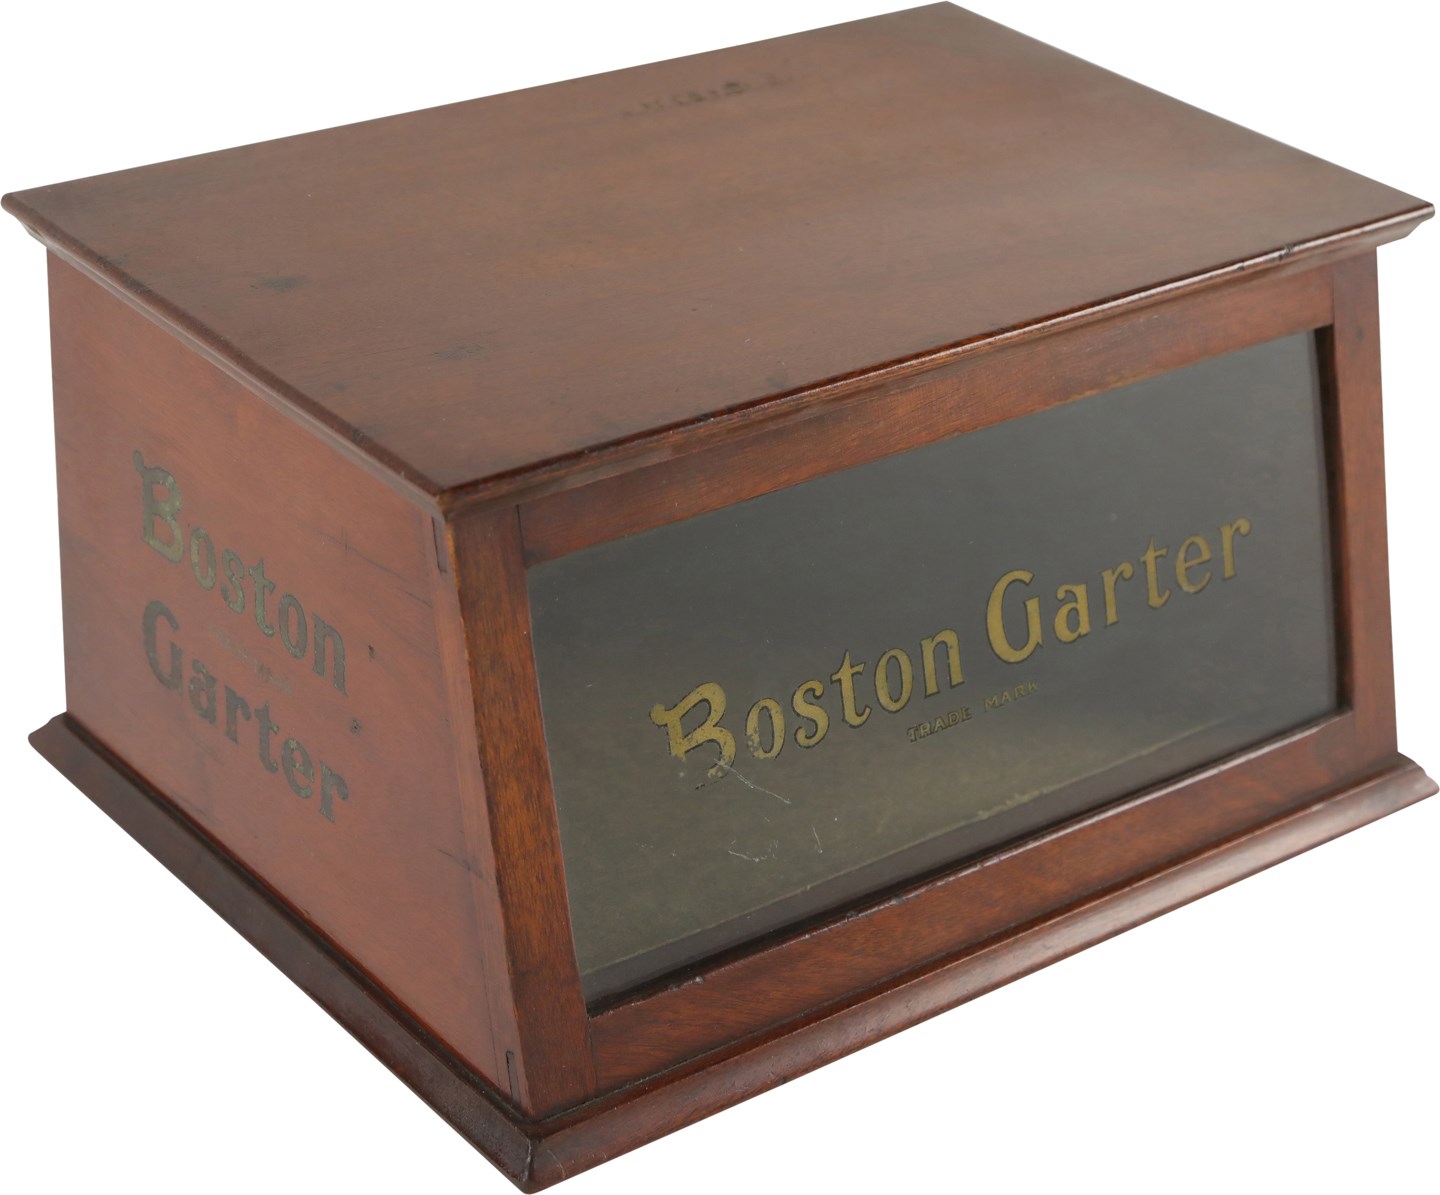 1910s Boston Garter In-Store Advertising Display Case